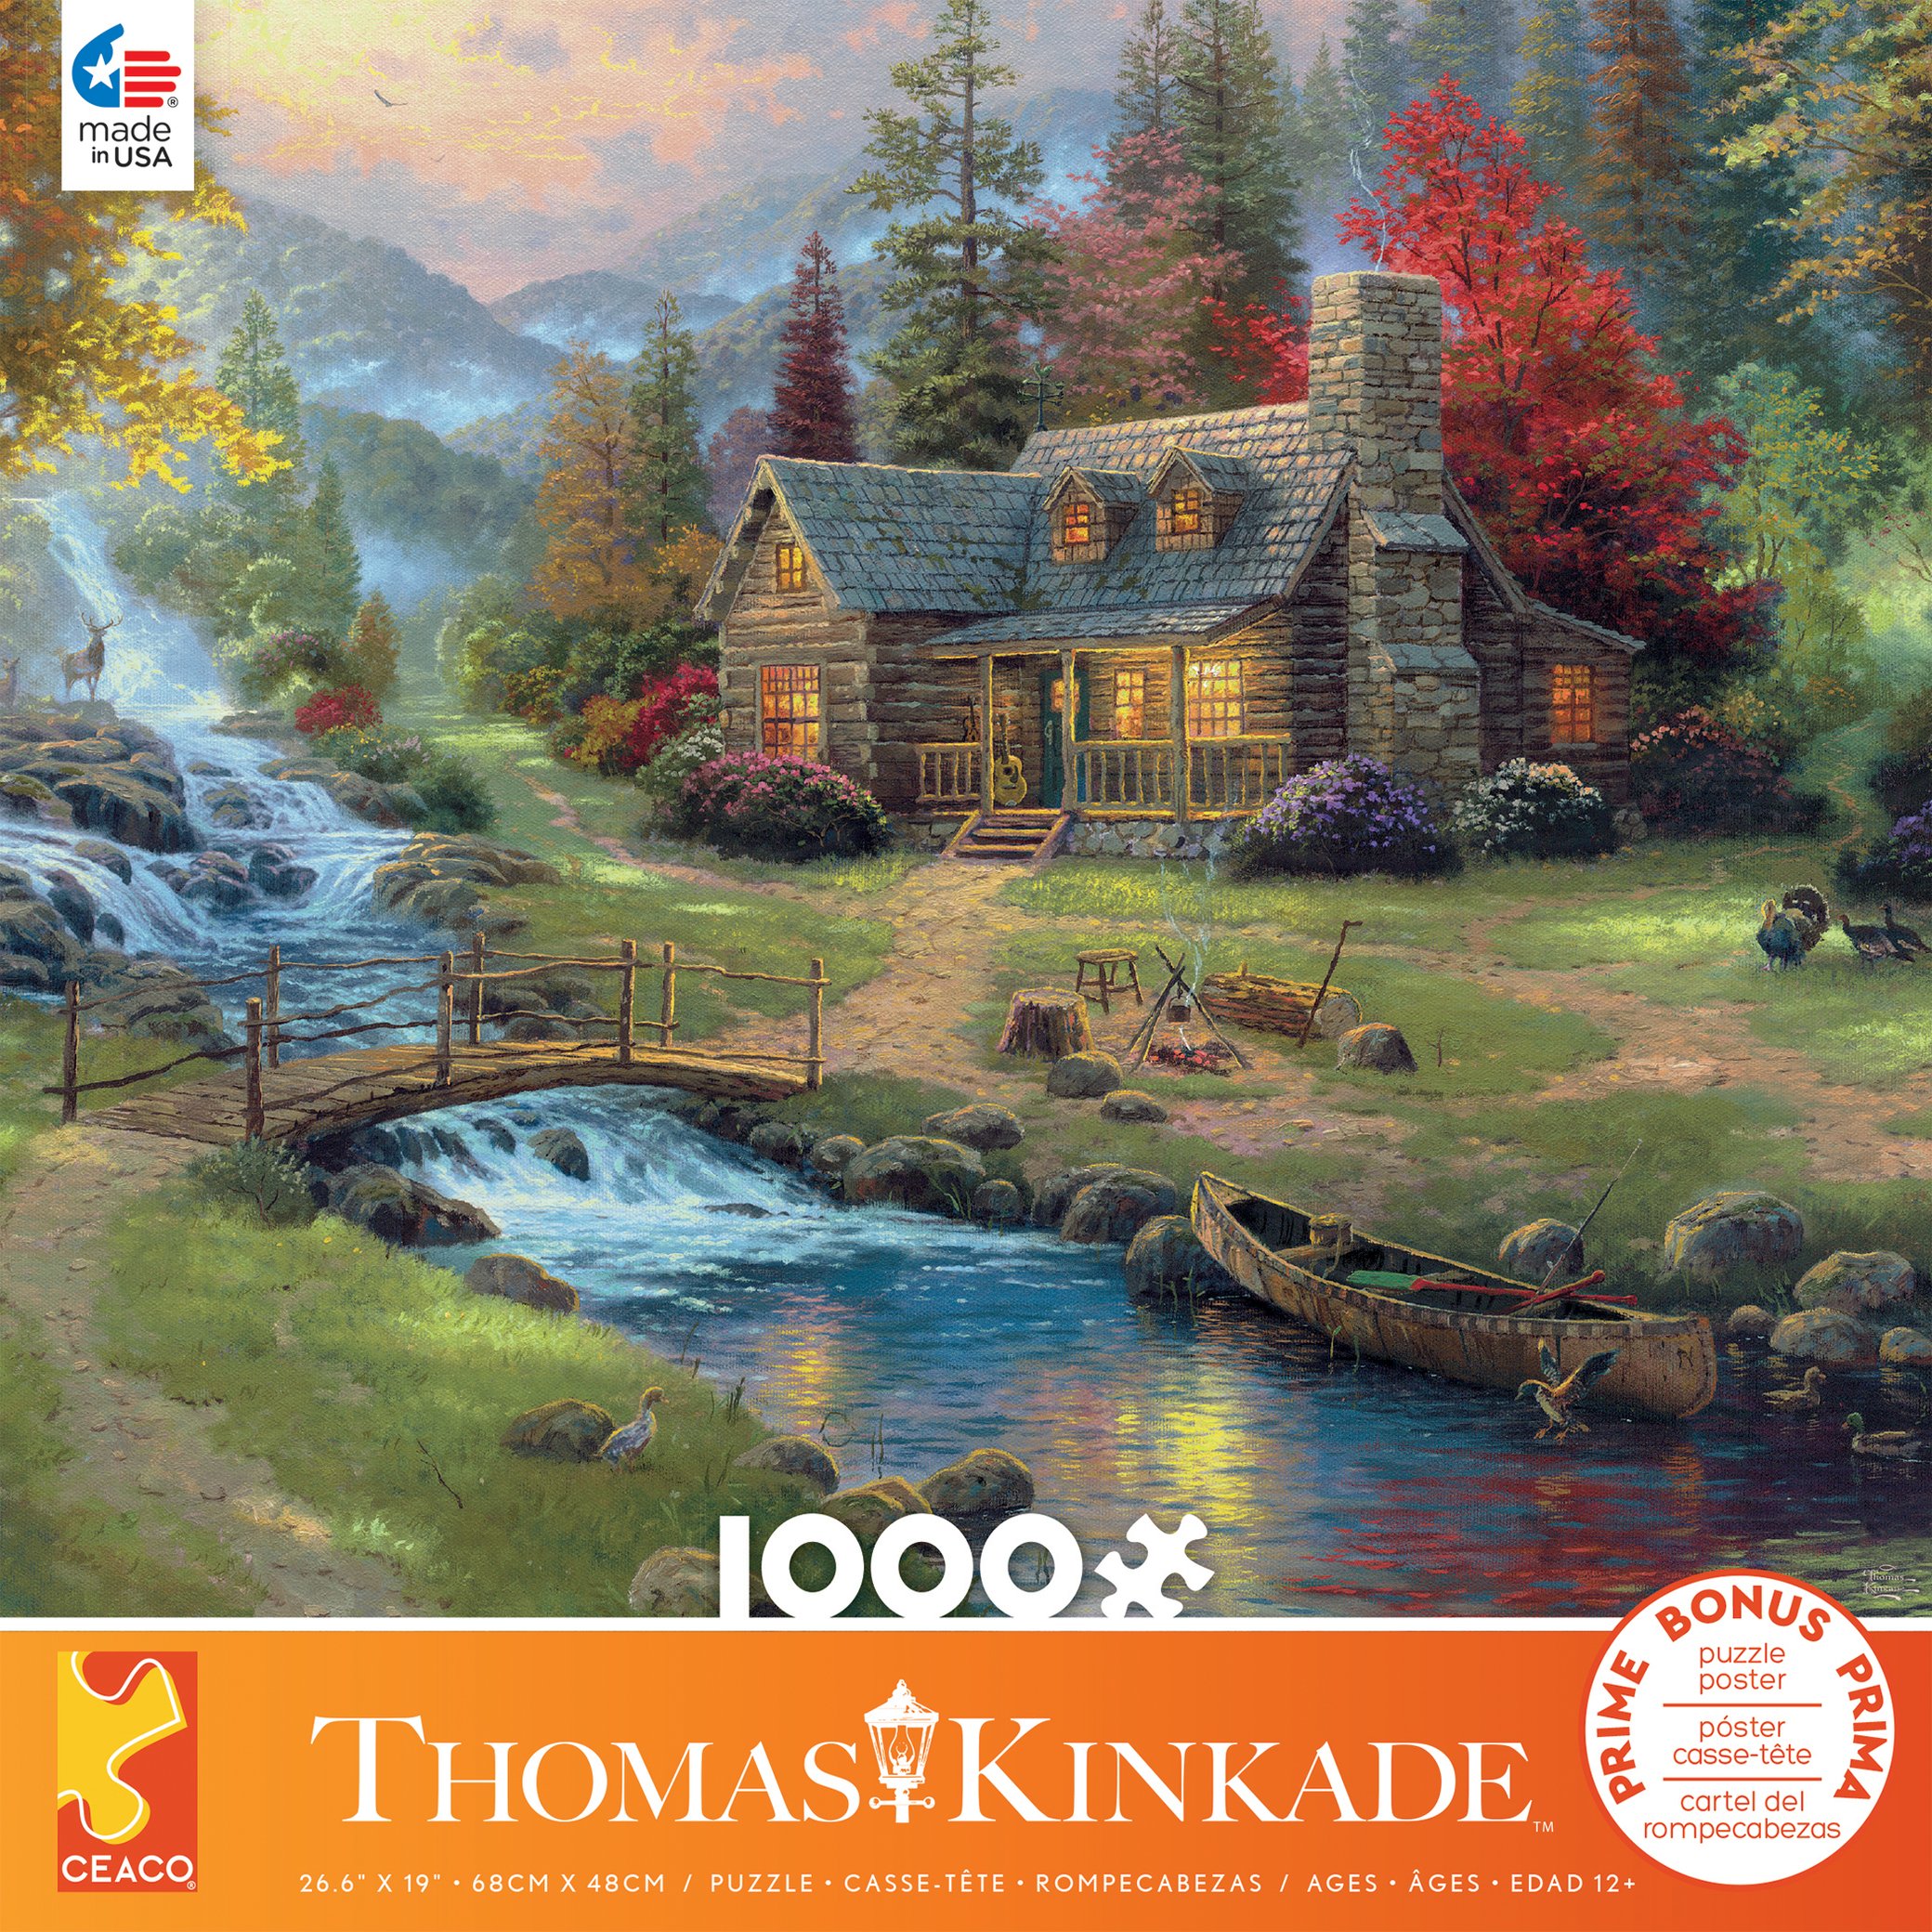 Ceaco - Thomas Kinkade - Mountain Paradise - 1000 Piece Jigsaw Puzzle - image 1 of 2